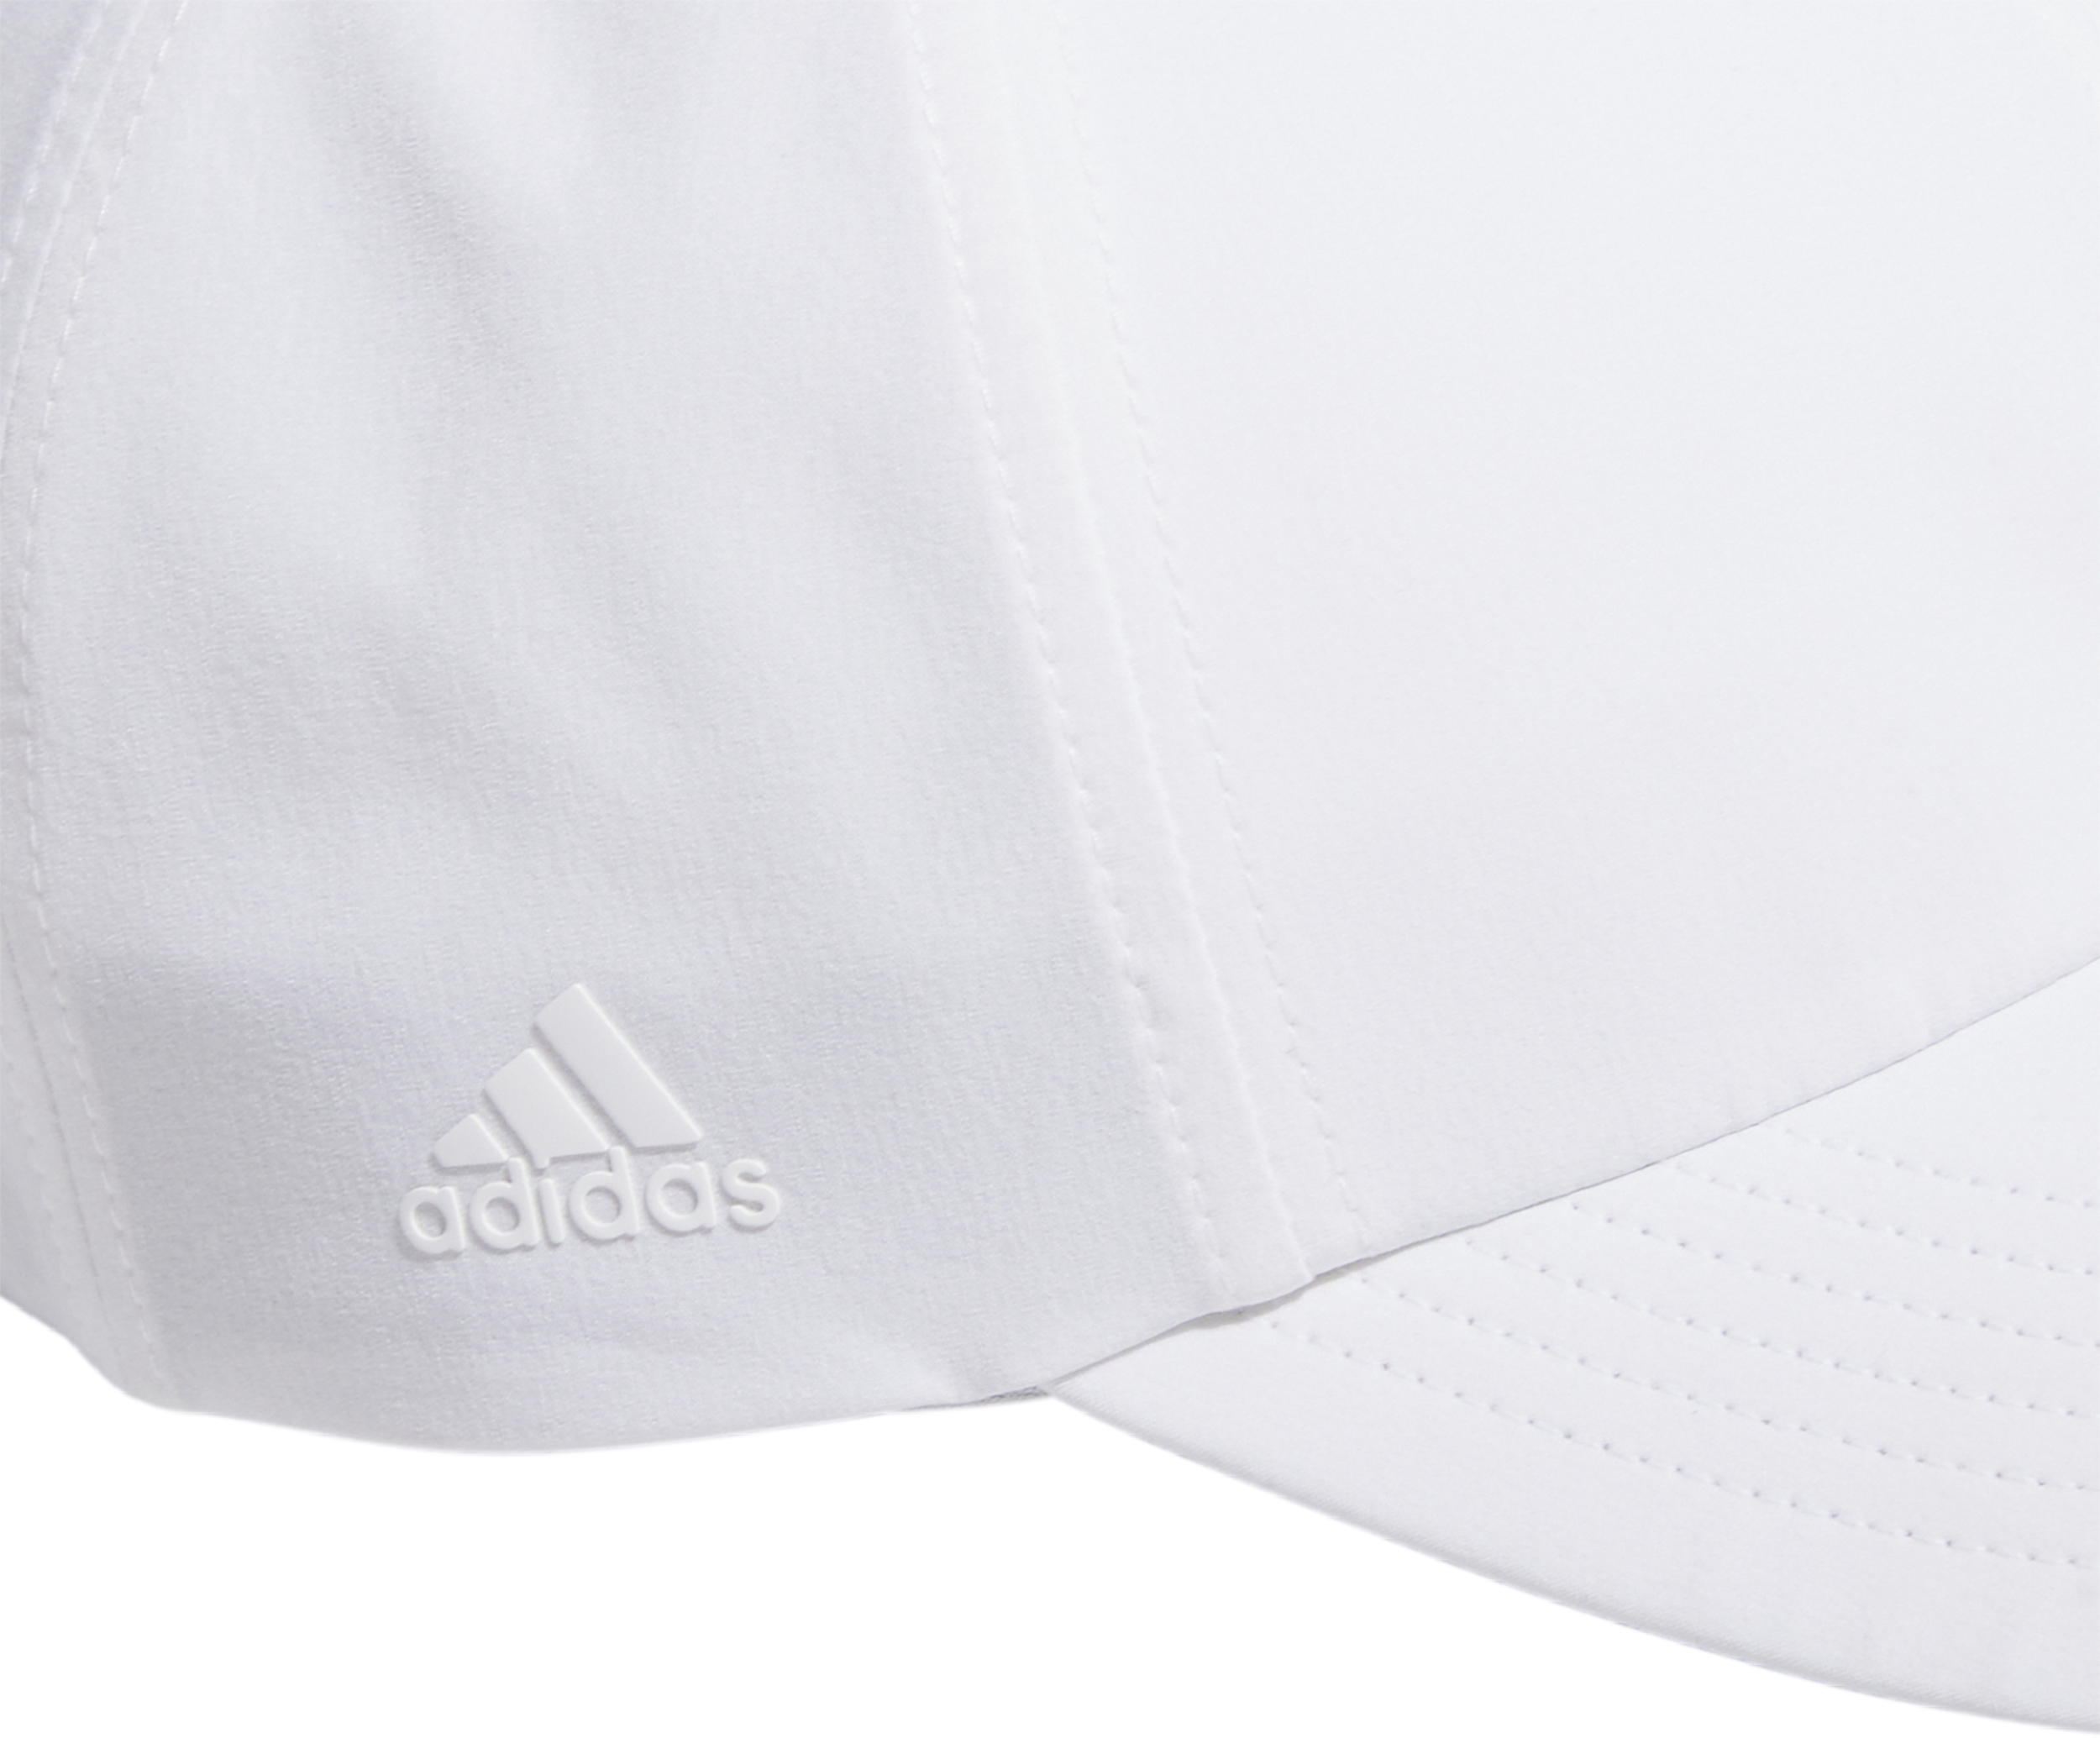 adidas Hat CRST, white